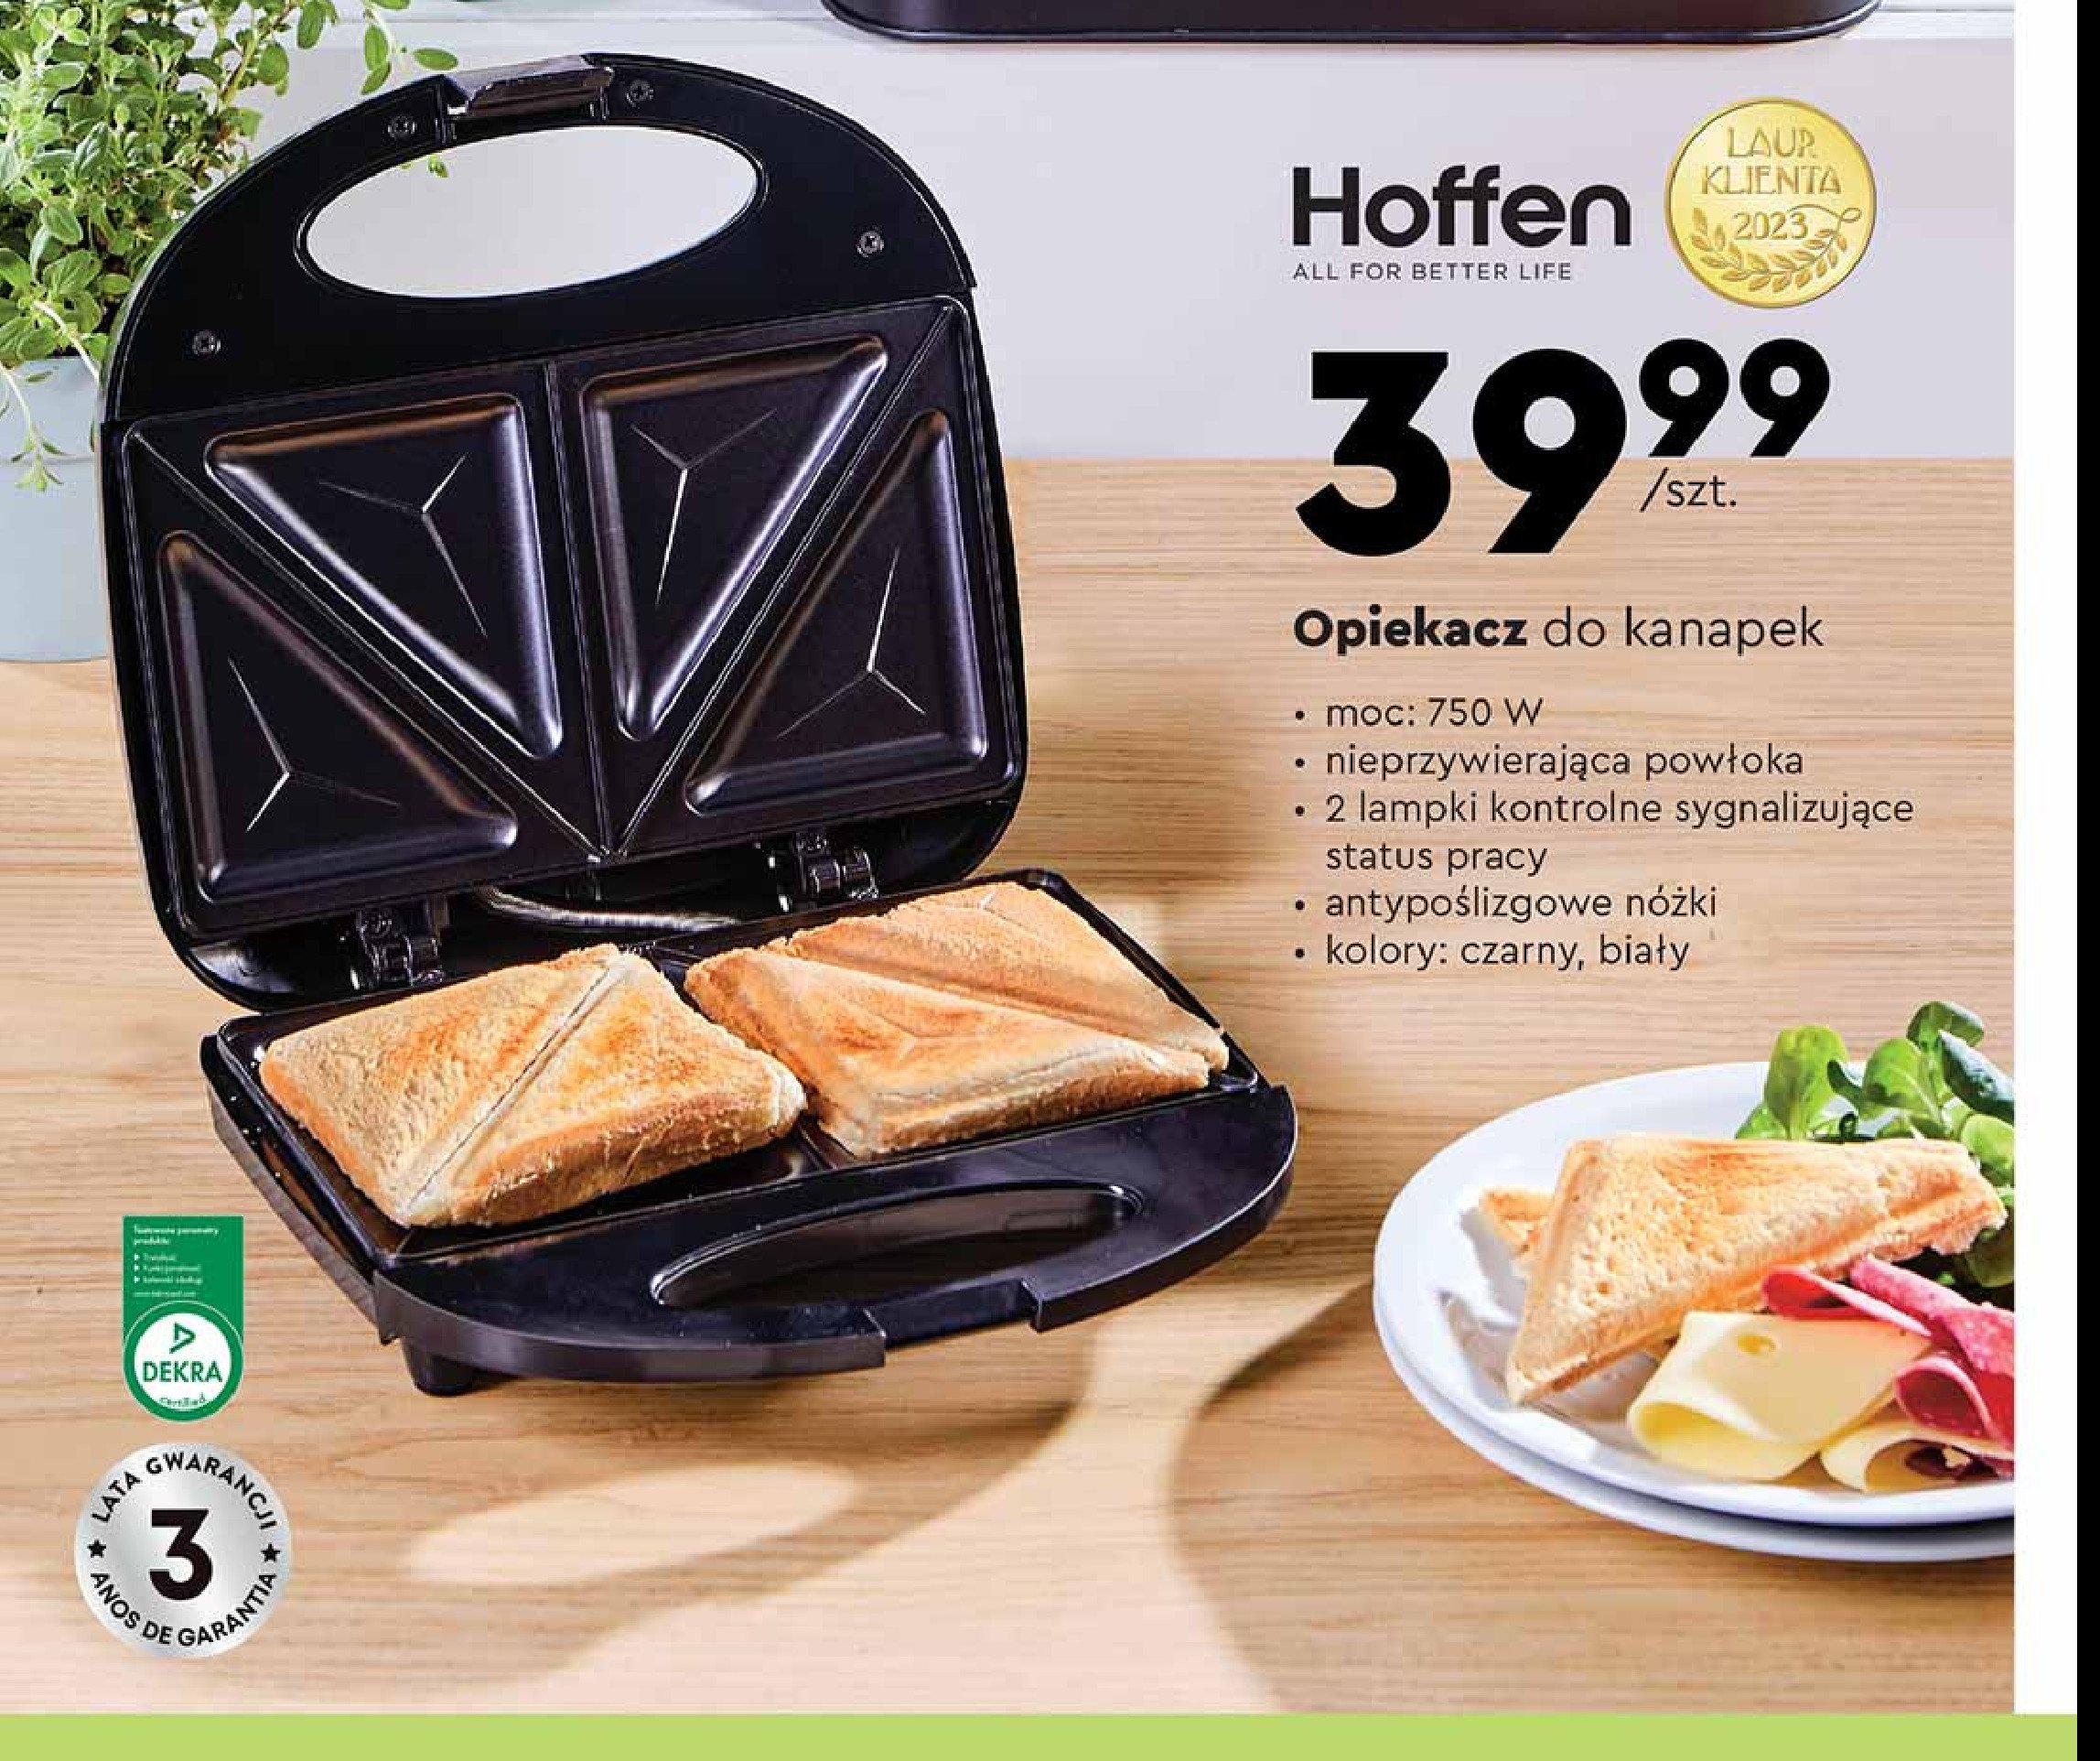 Opiekacz do kanapek 750 w Hoffen promocja